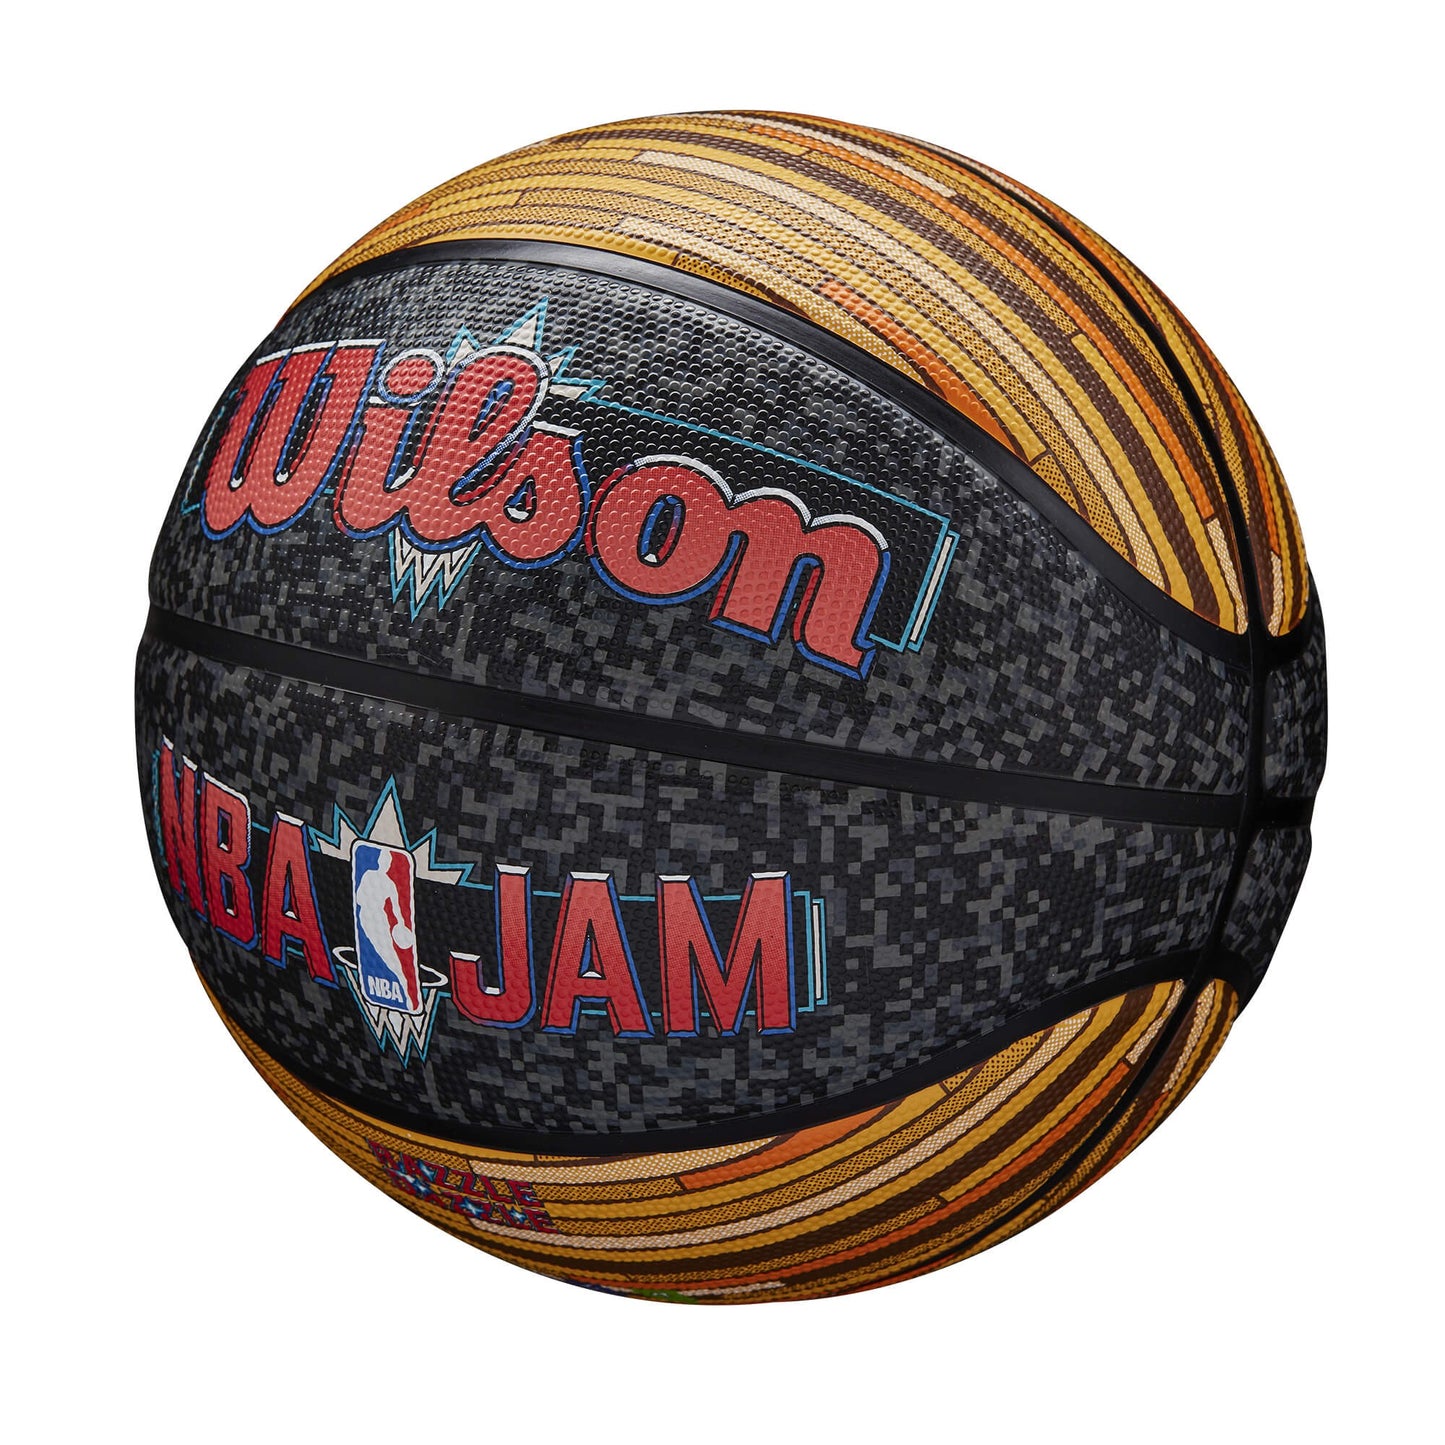 Wilson NBA Jam Outdoor Basketball Ball (sz. 7)